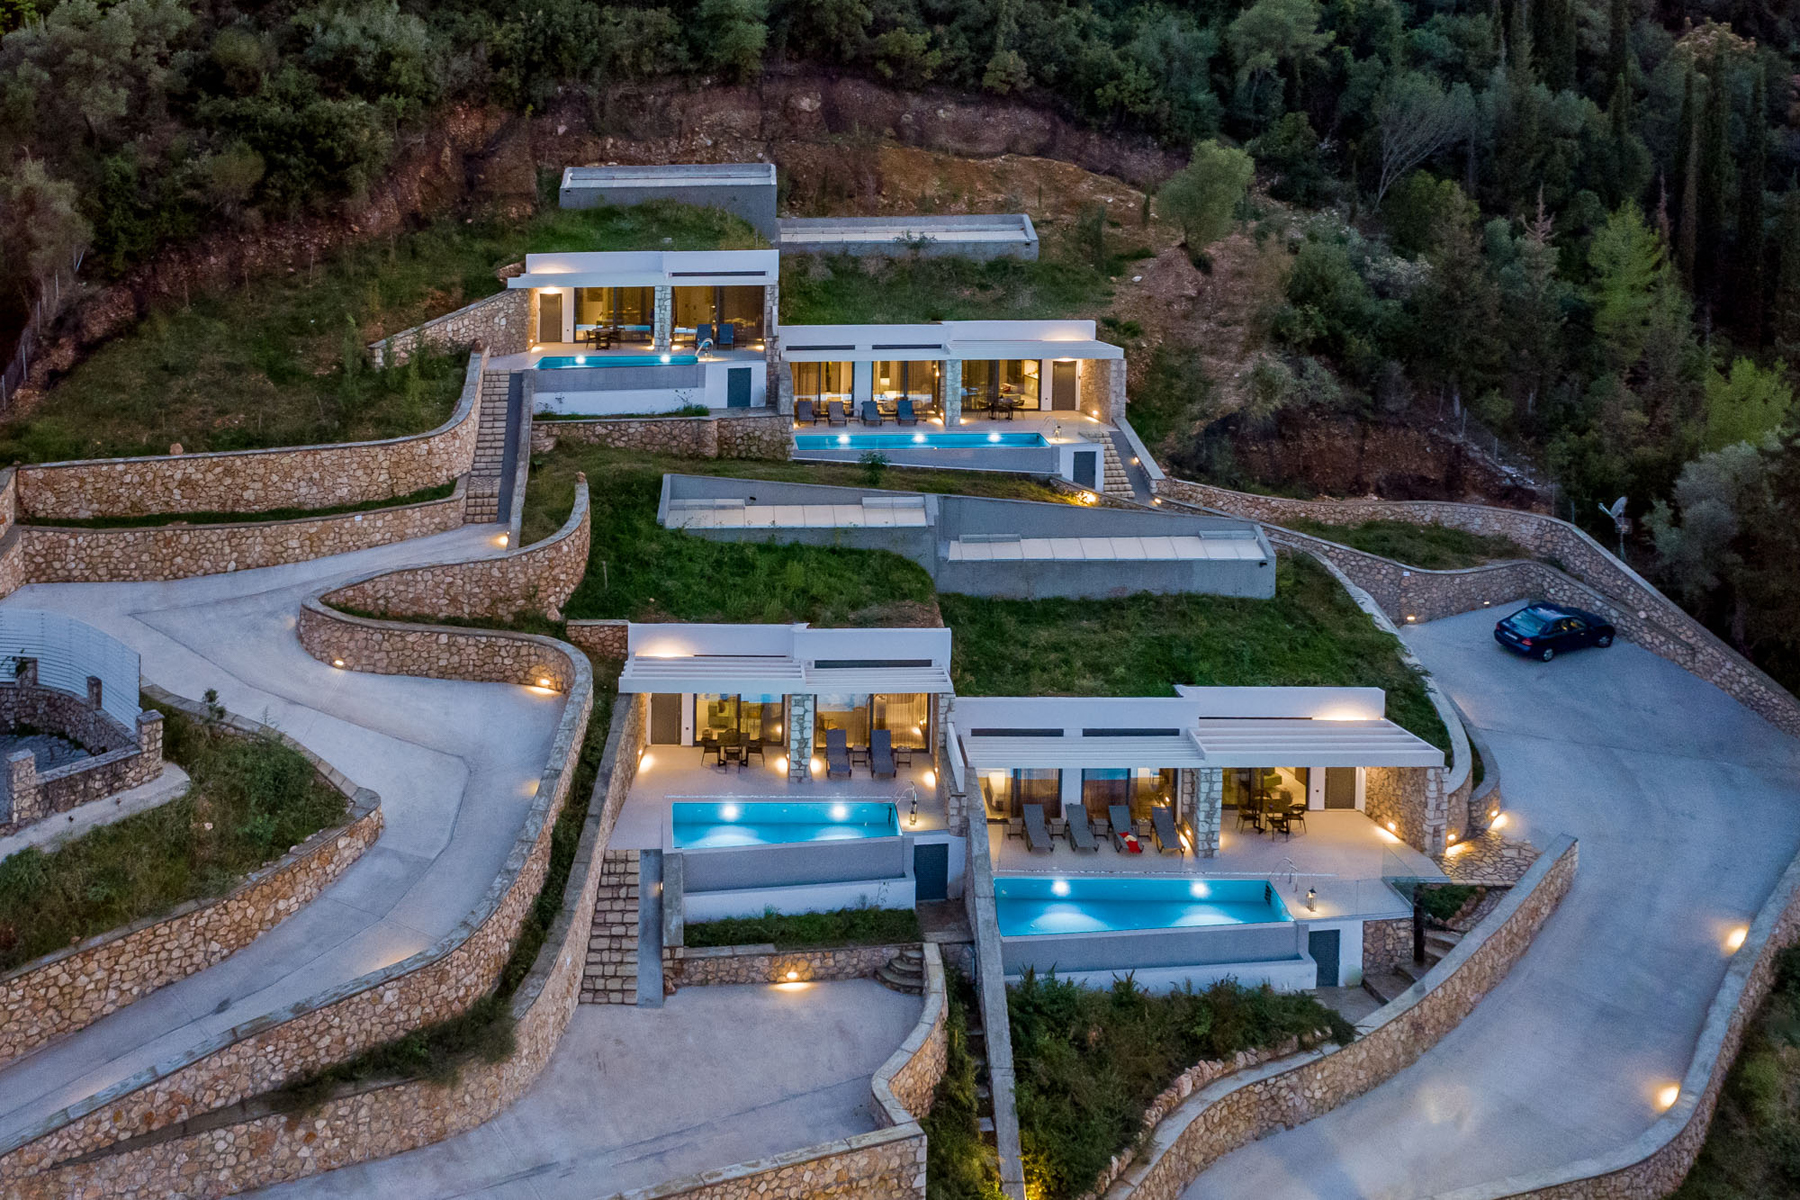 z luxury villa bita lefkada night four villas trees mountain parking area buildings swimming pool lights stairs